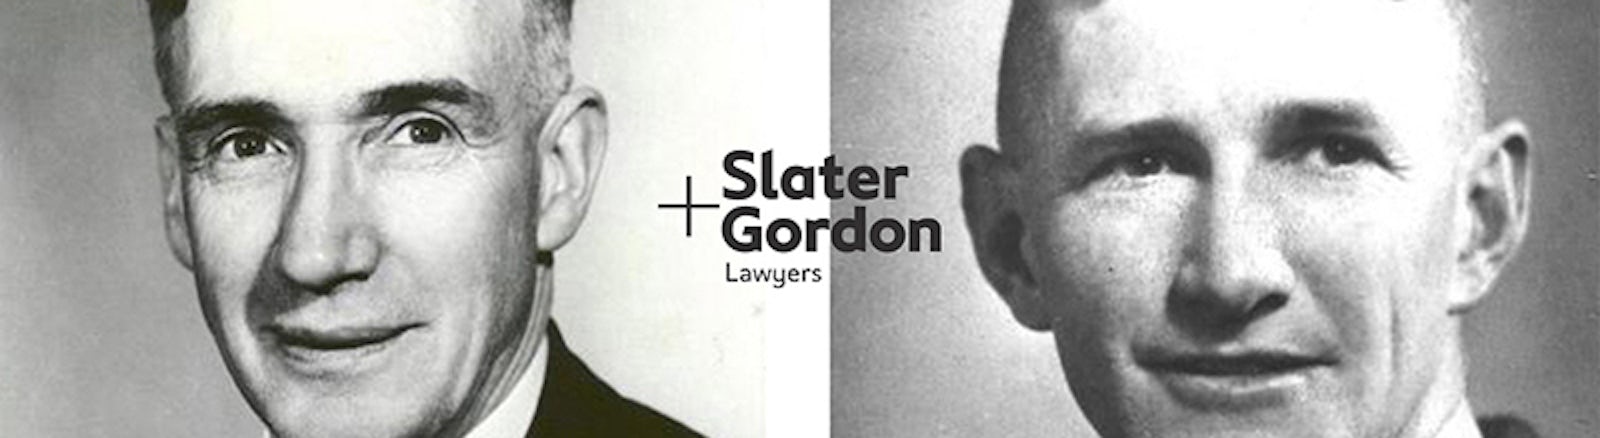 Slatergordonfounders